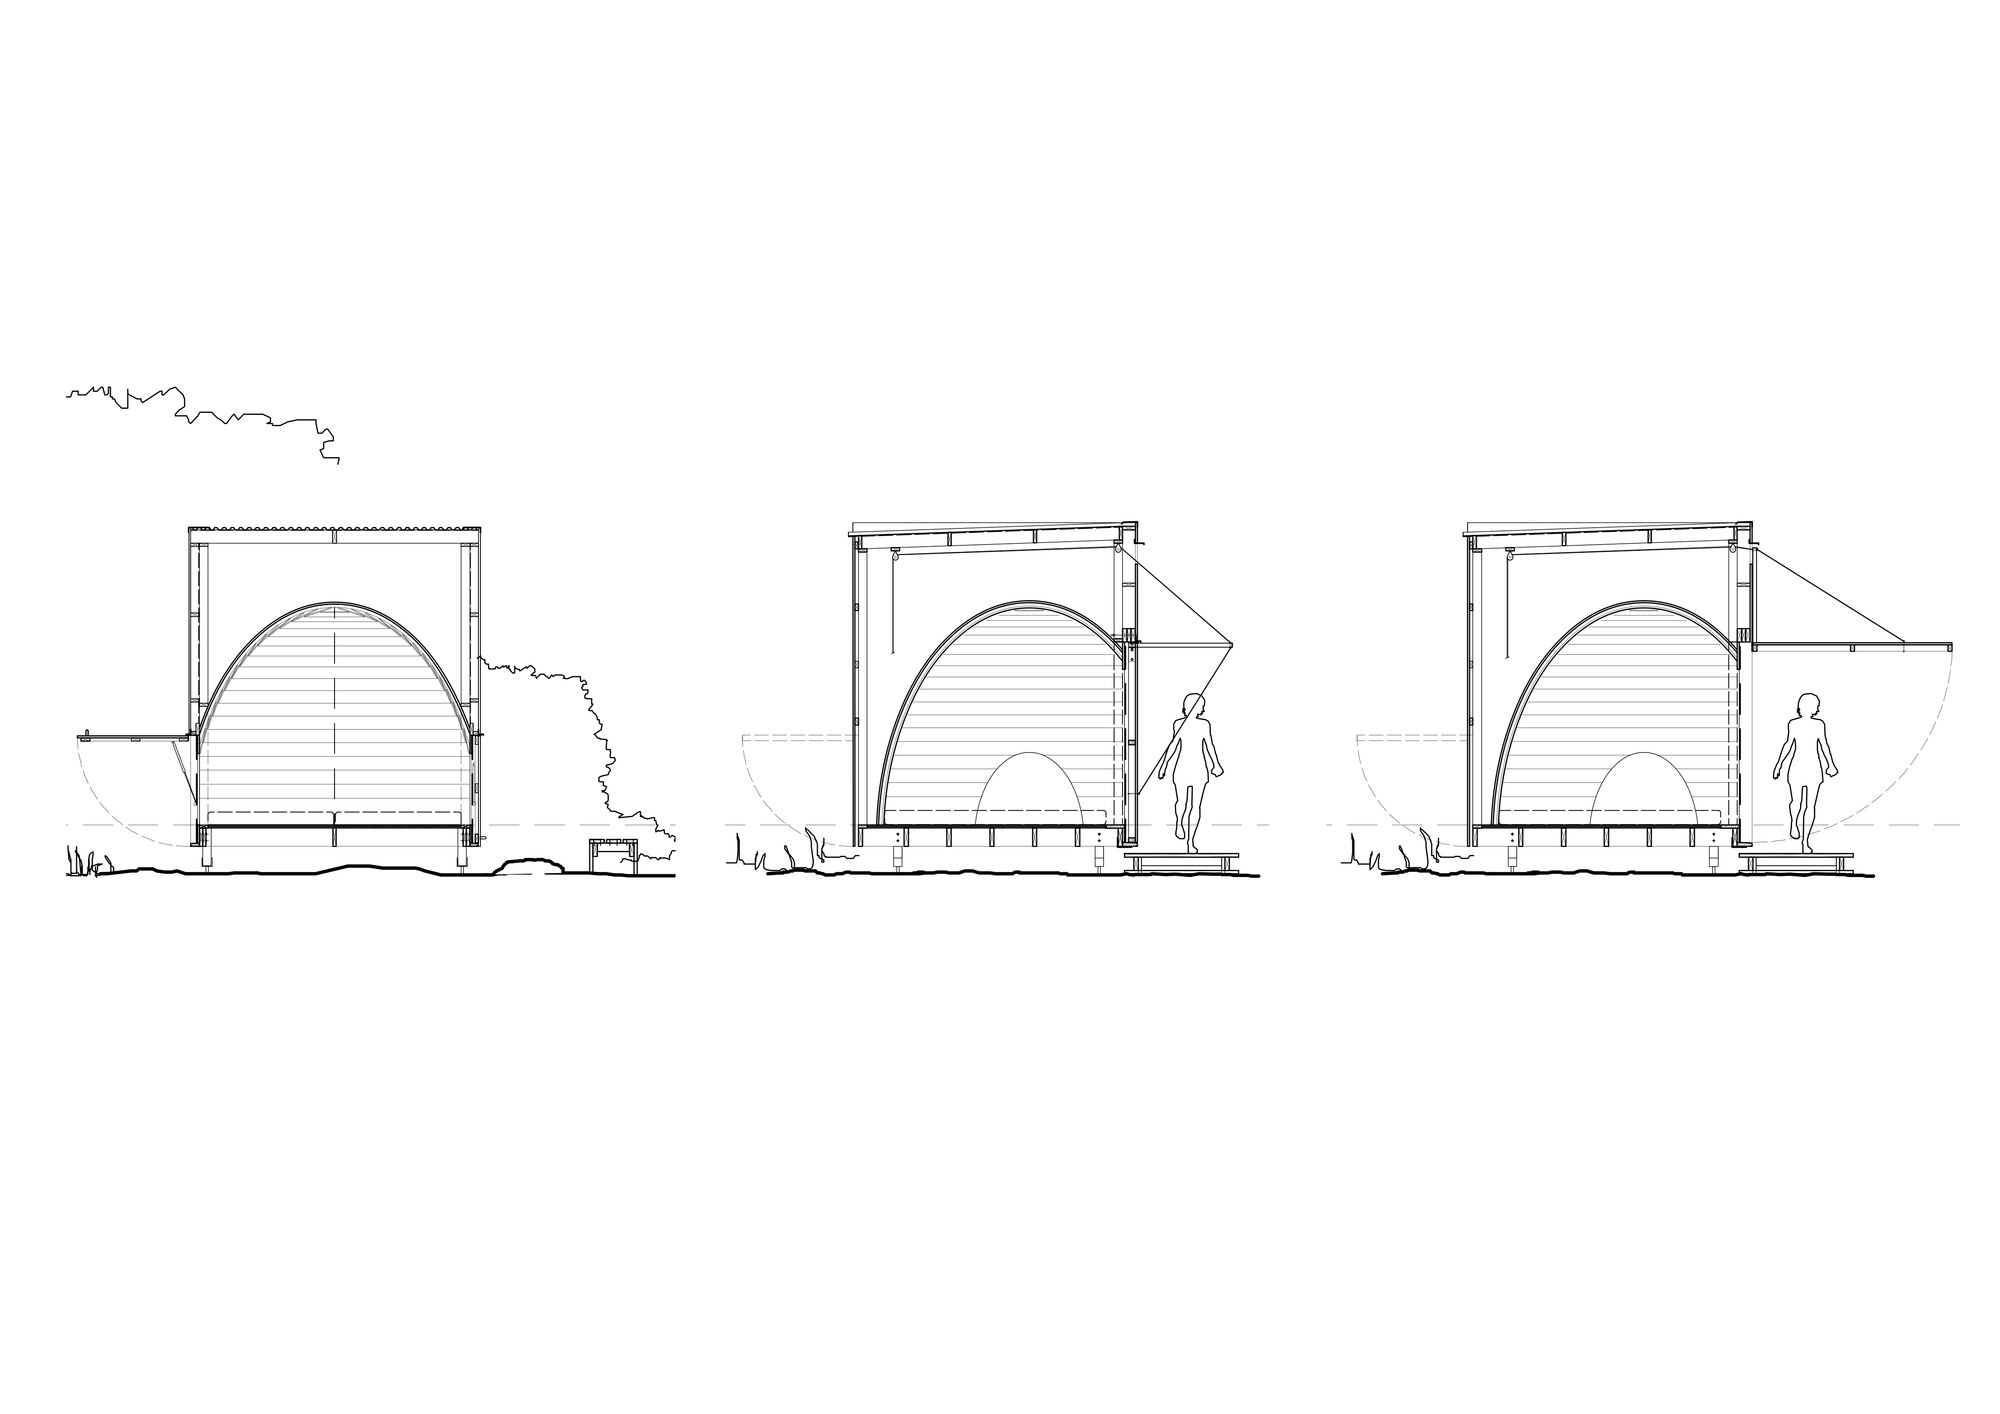 Krakani Lumi by Taylor and Hinds Architects